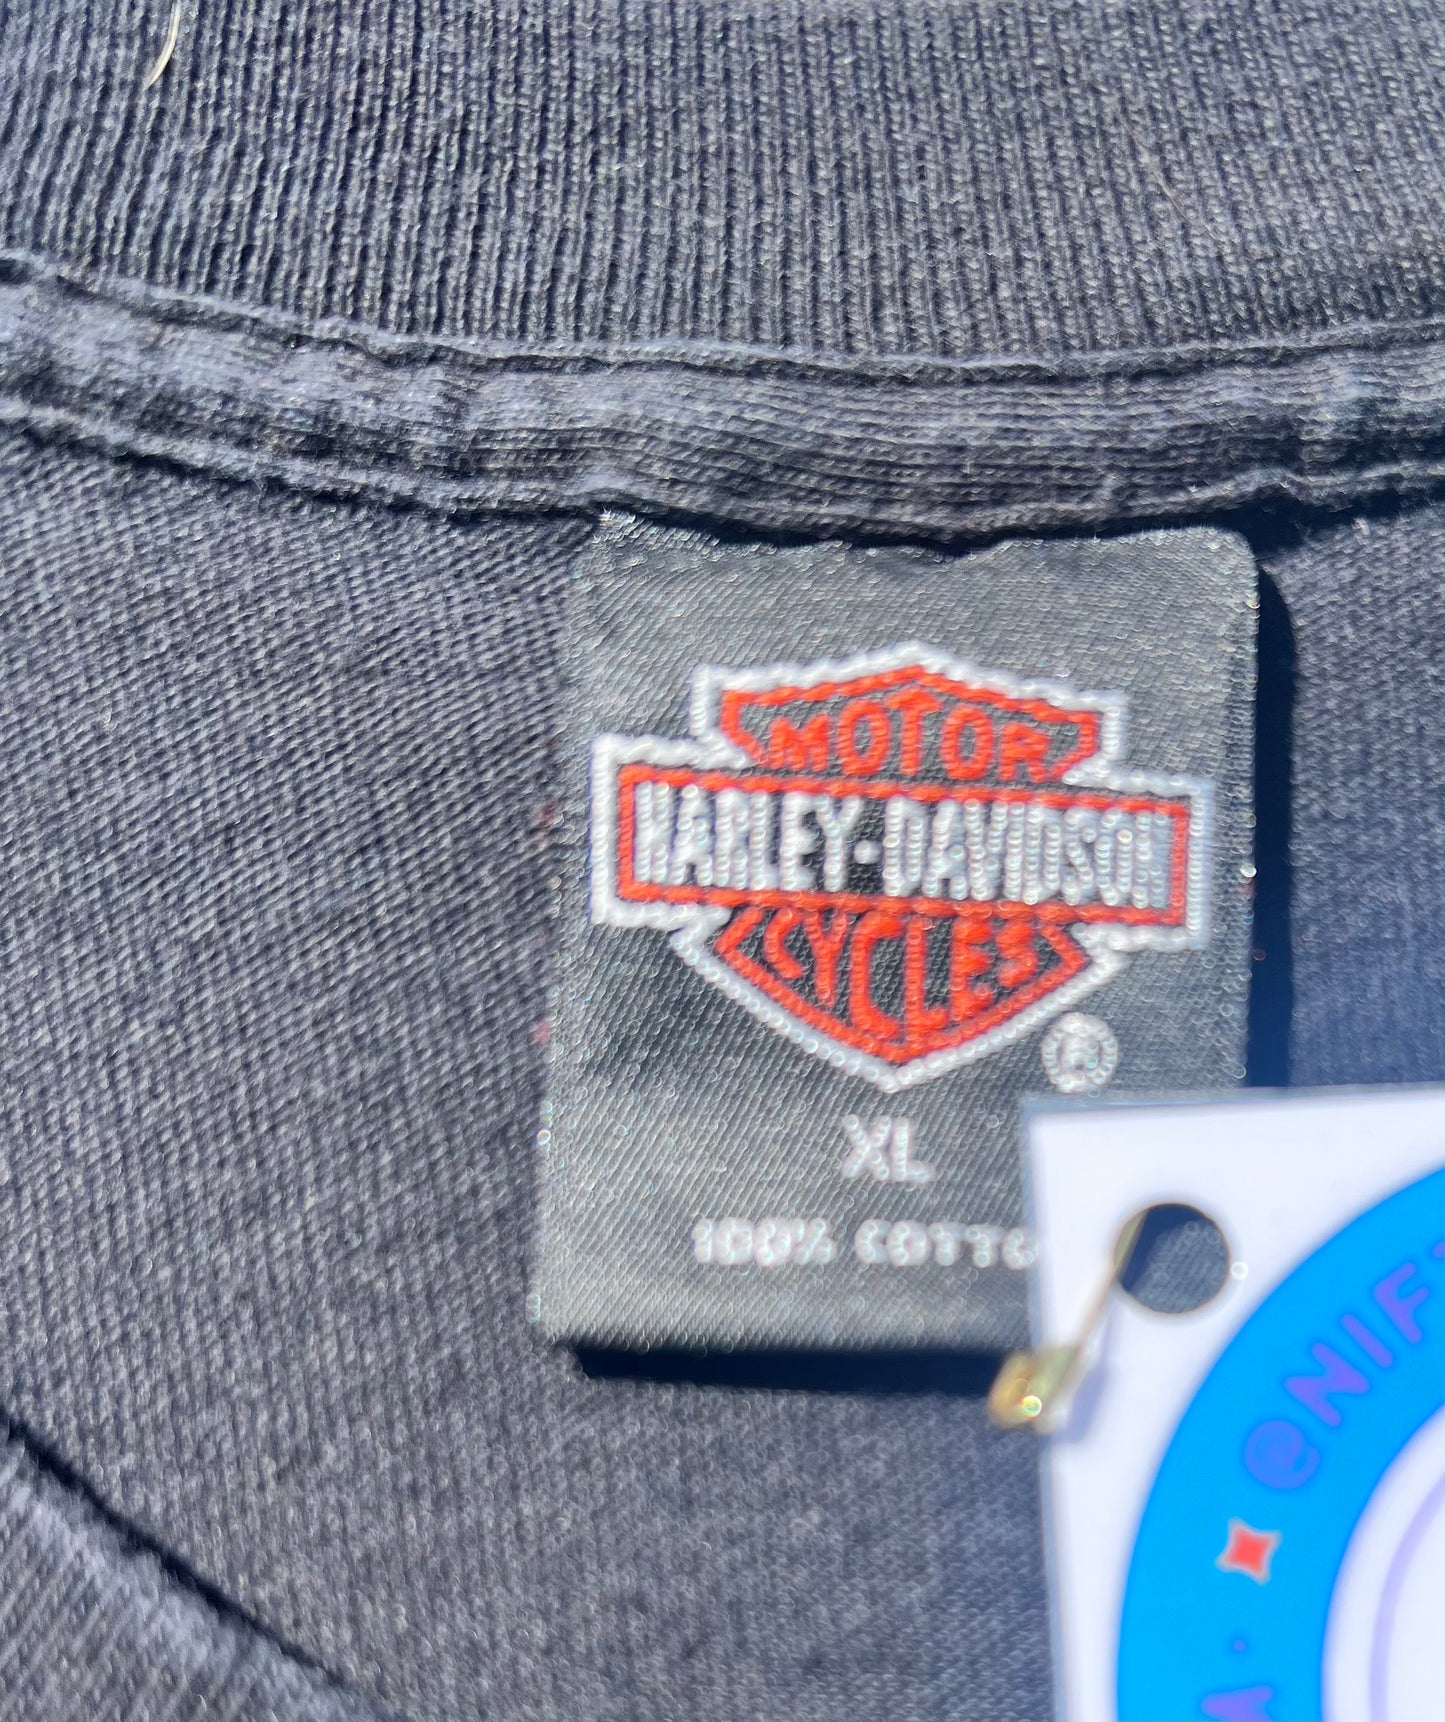 '97 Daytona Harley Davidson Tee (XL)